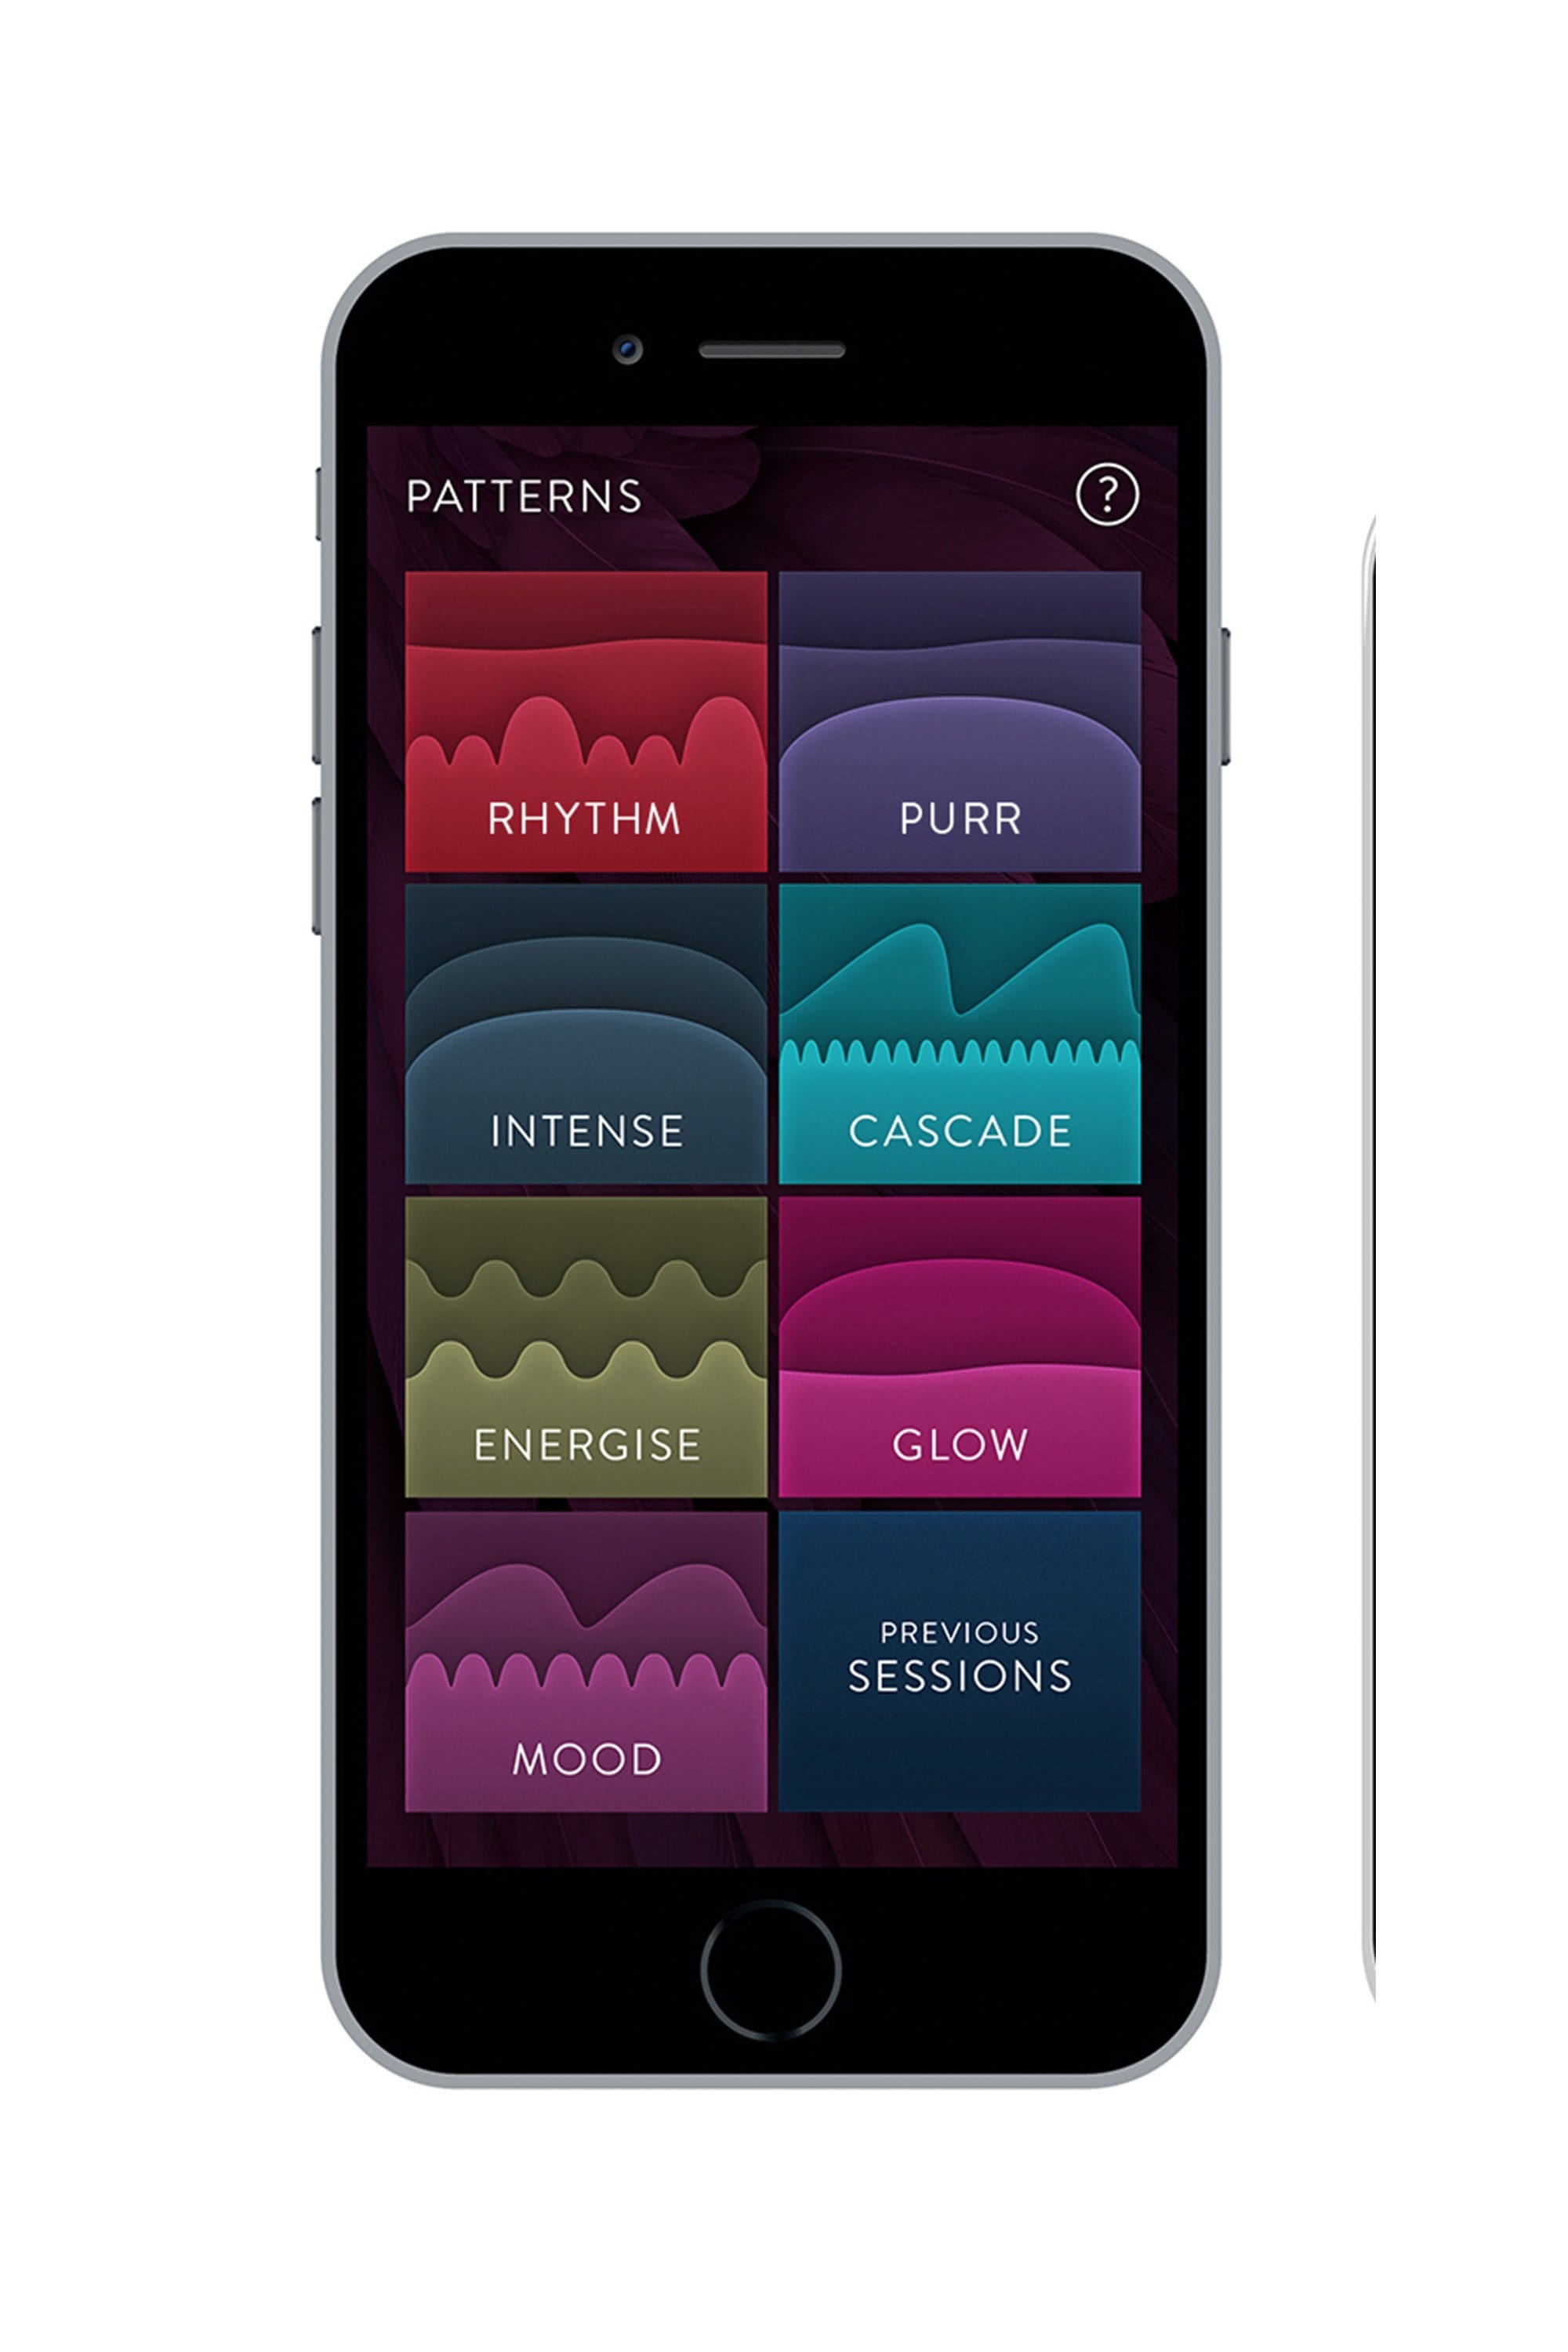 Dua App Controlled Wearable Vibrator Pink